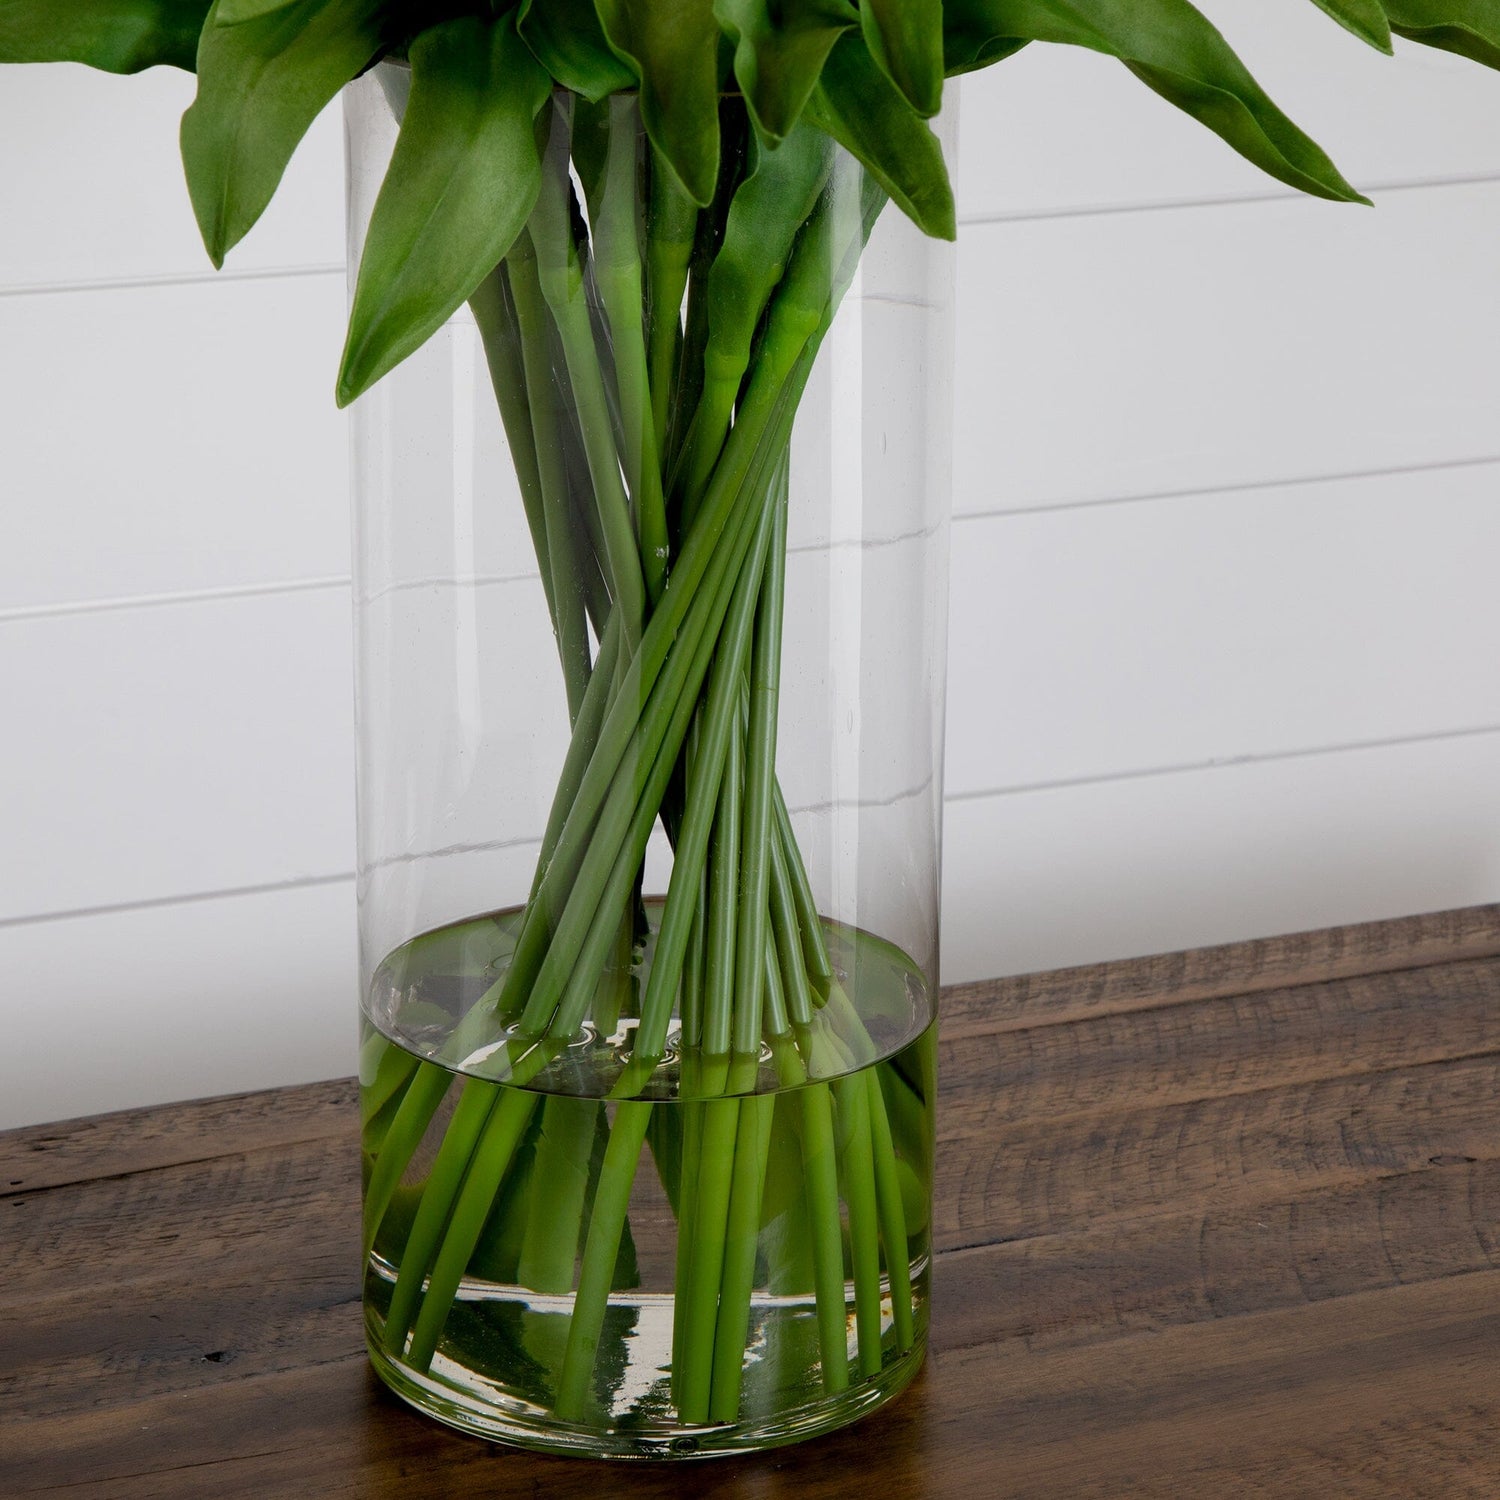 Signature Collection 26” Giant Tulip Artificial Arrangement in Glass Vase